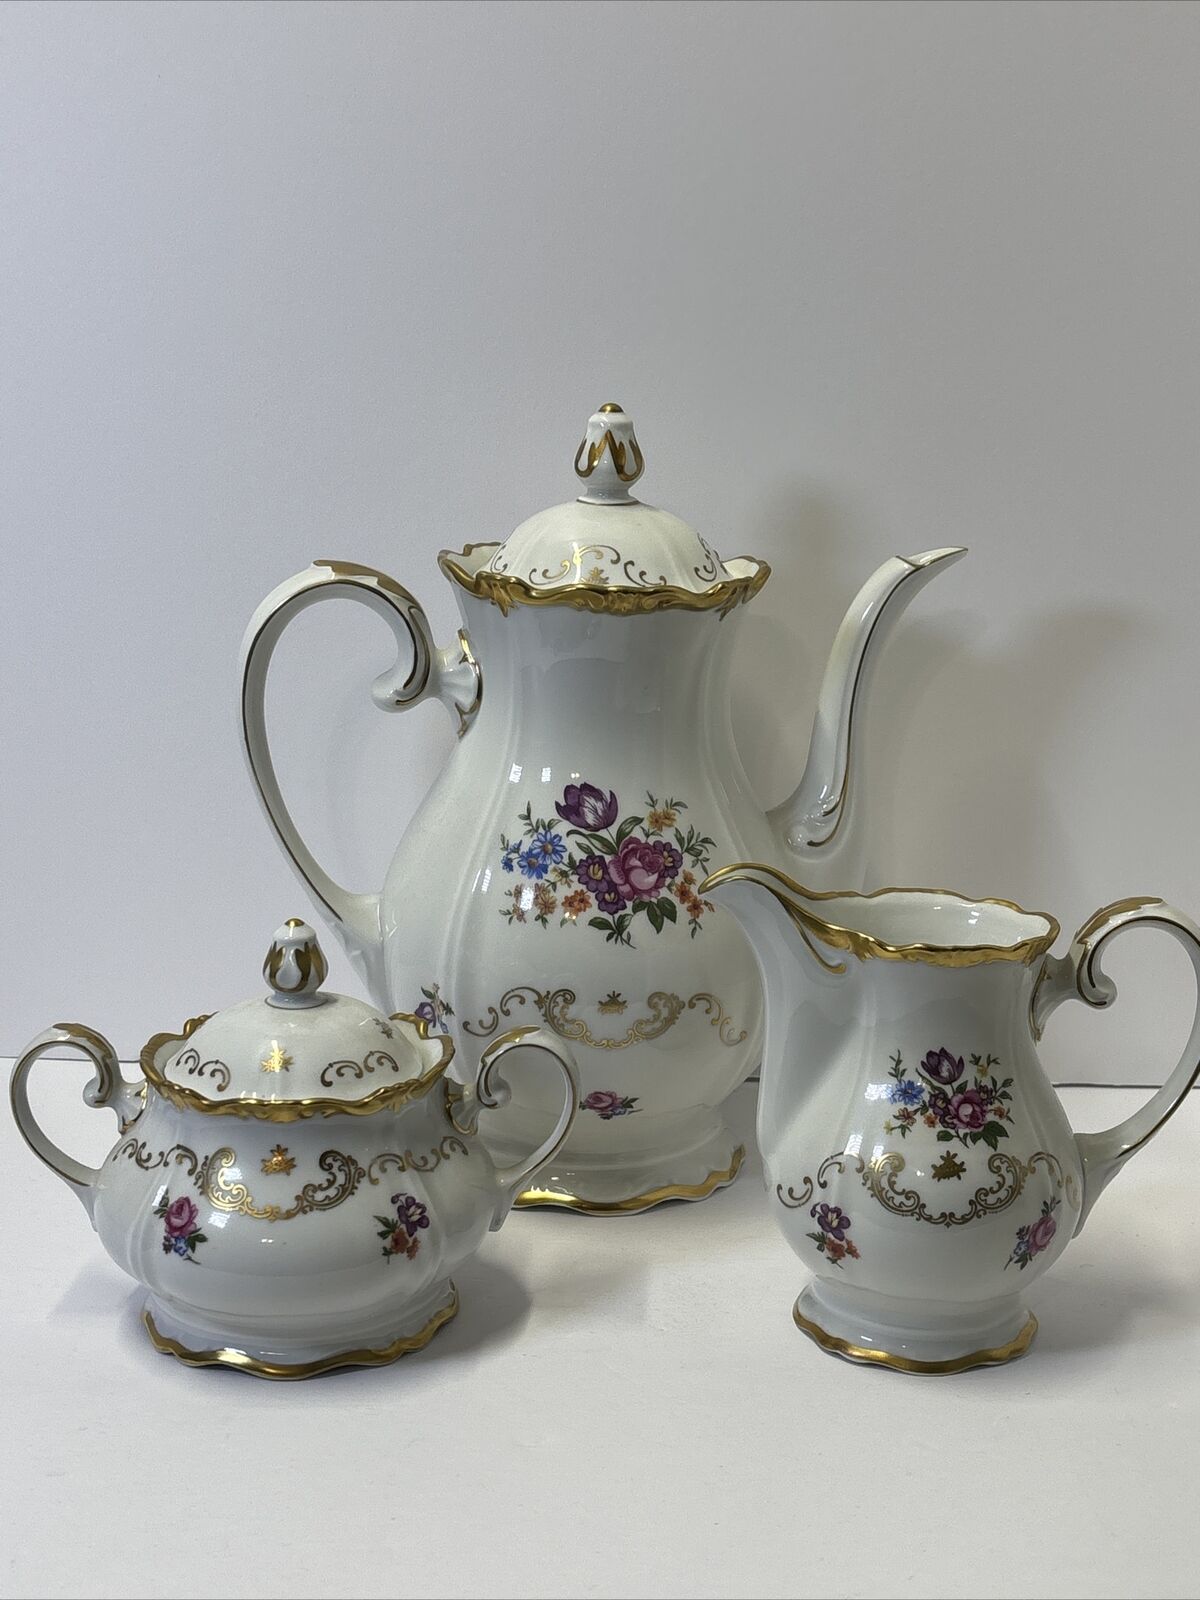 RARE Vintage Reichenbach Tea Set with Tea Pot Creamer and Sugar